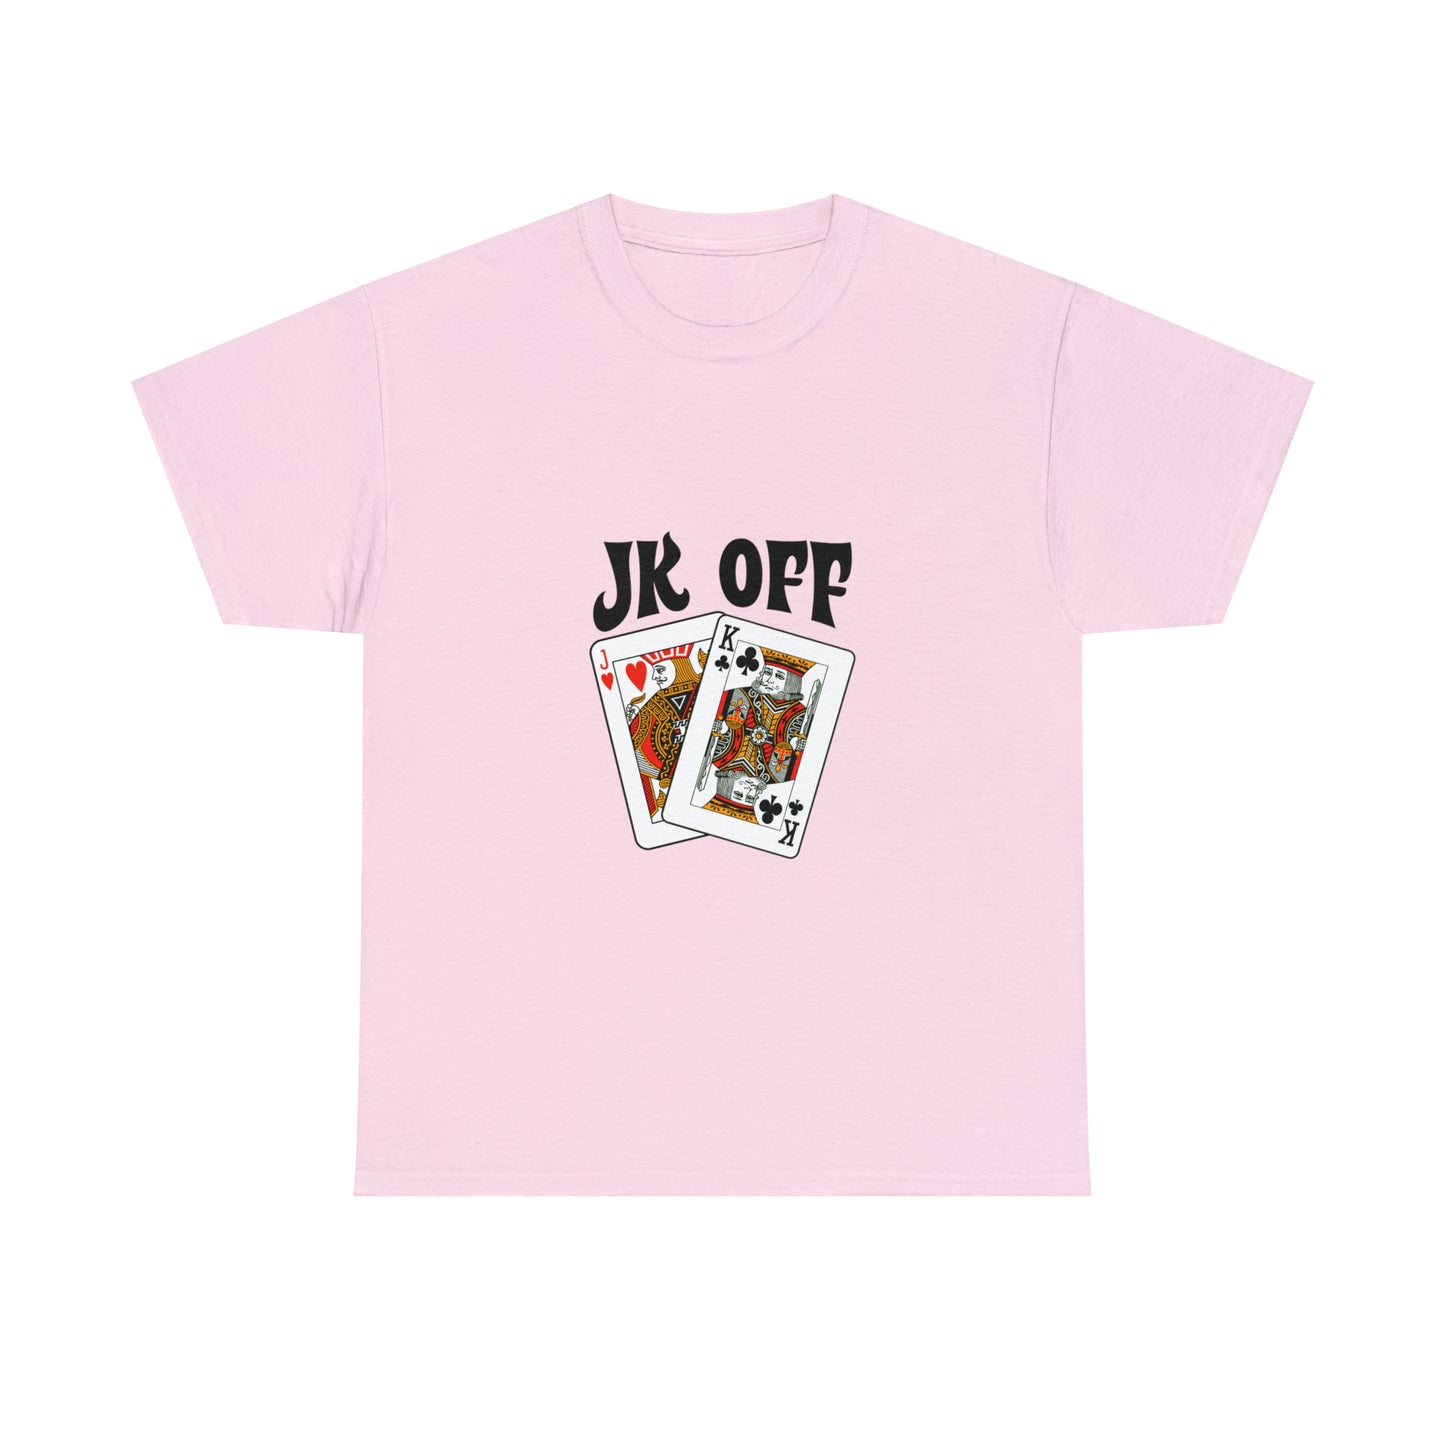 Custom Parody T-shirt, JK off shirt design.